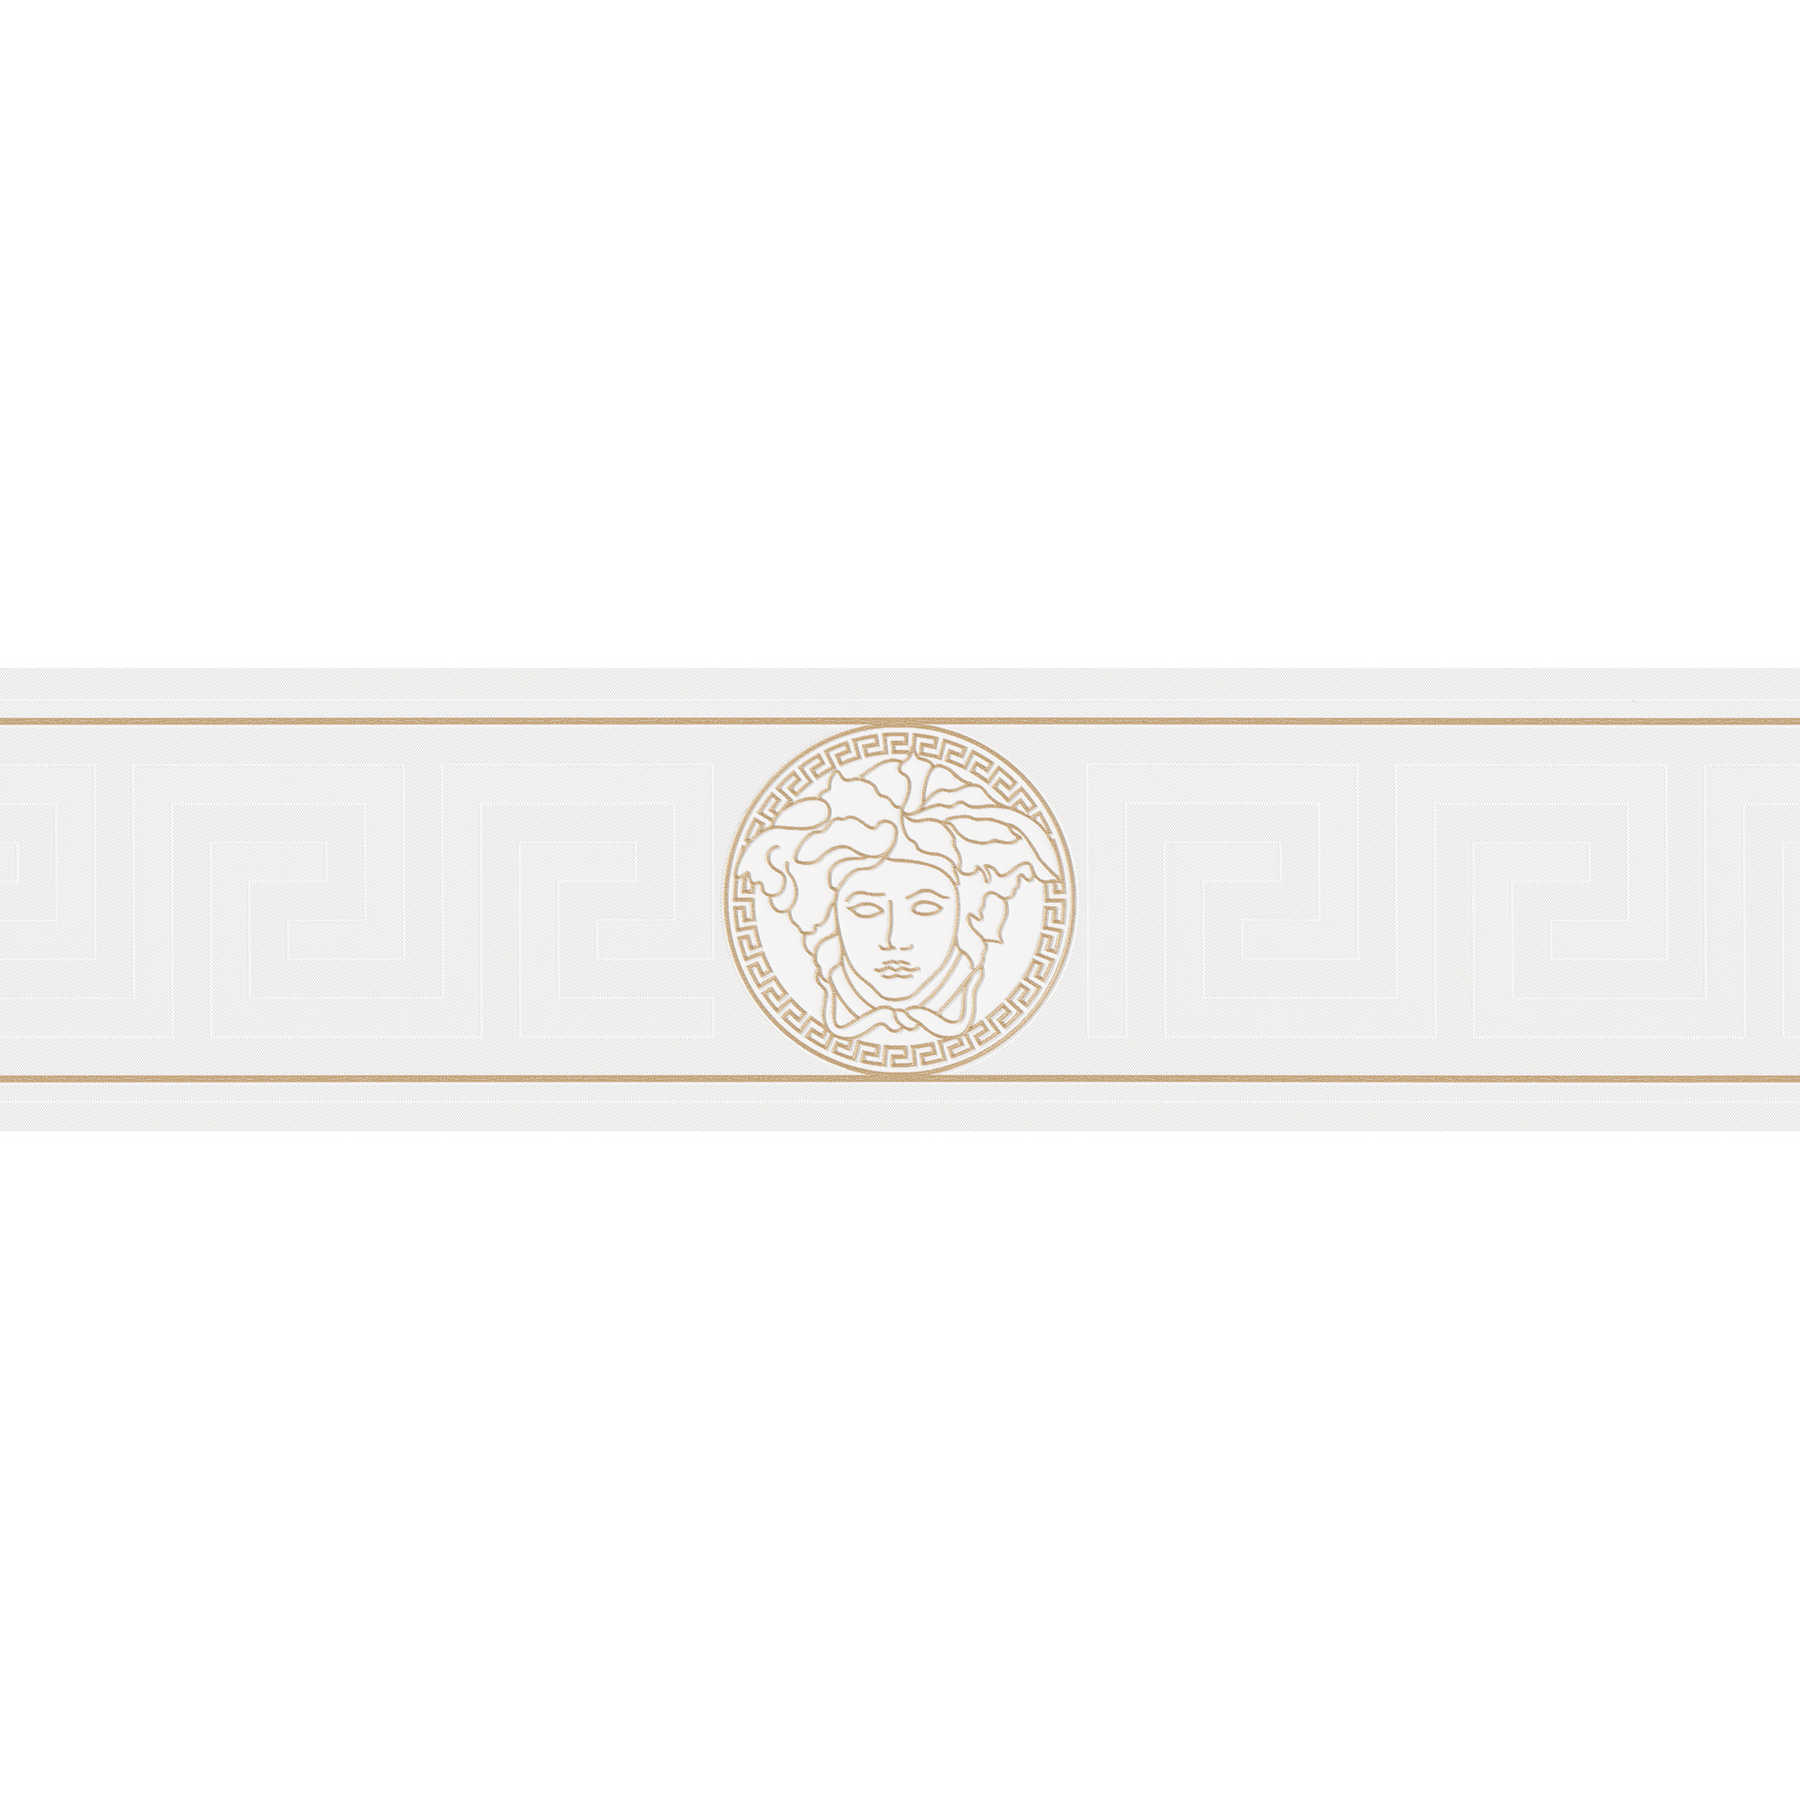 VERSACE wallpaper border Medusa emblem - metallic, white
